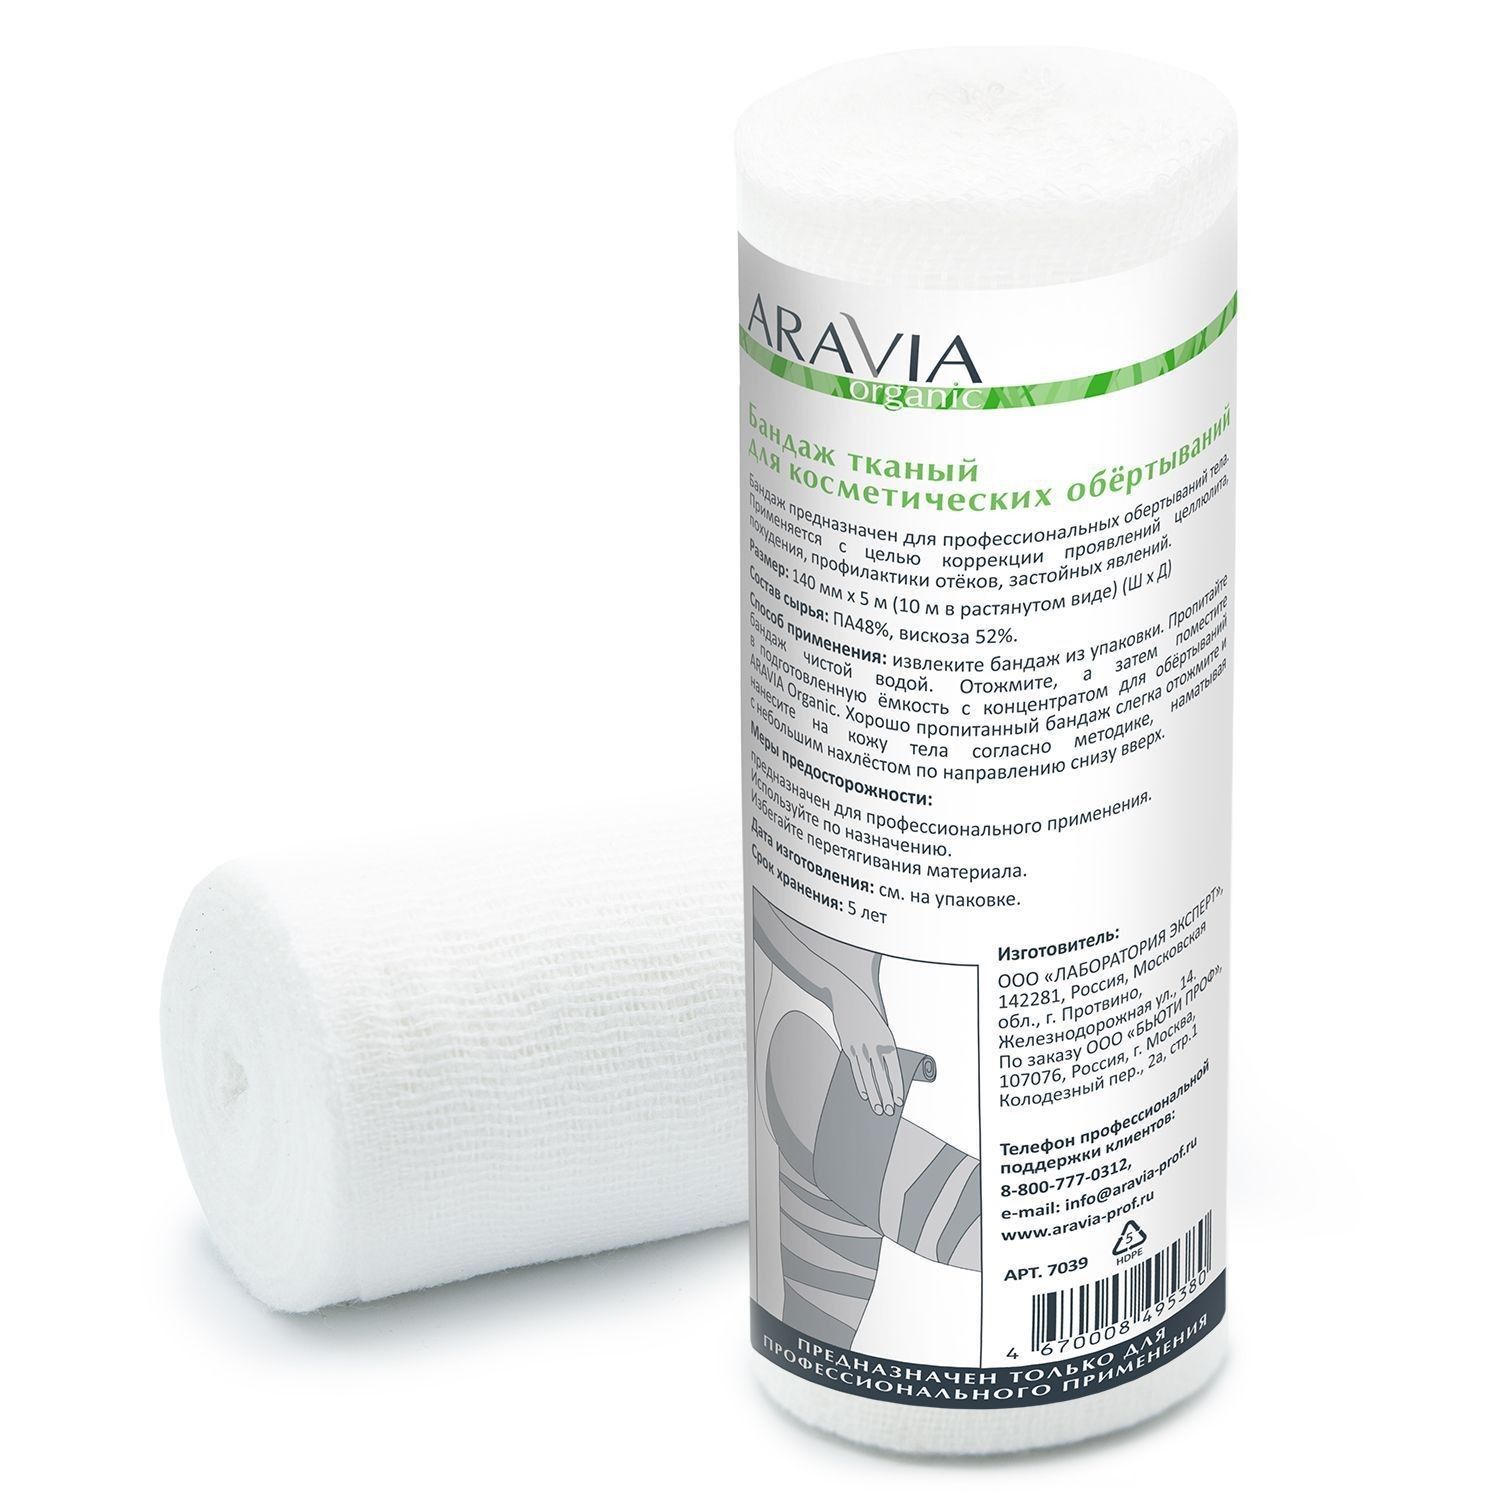 Бандаж для косметических обертываний Aravia Professional тканный 14 см x 10 м aravia professional бандаж тканный для косметических обертываний